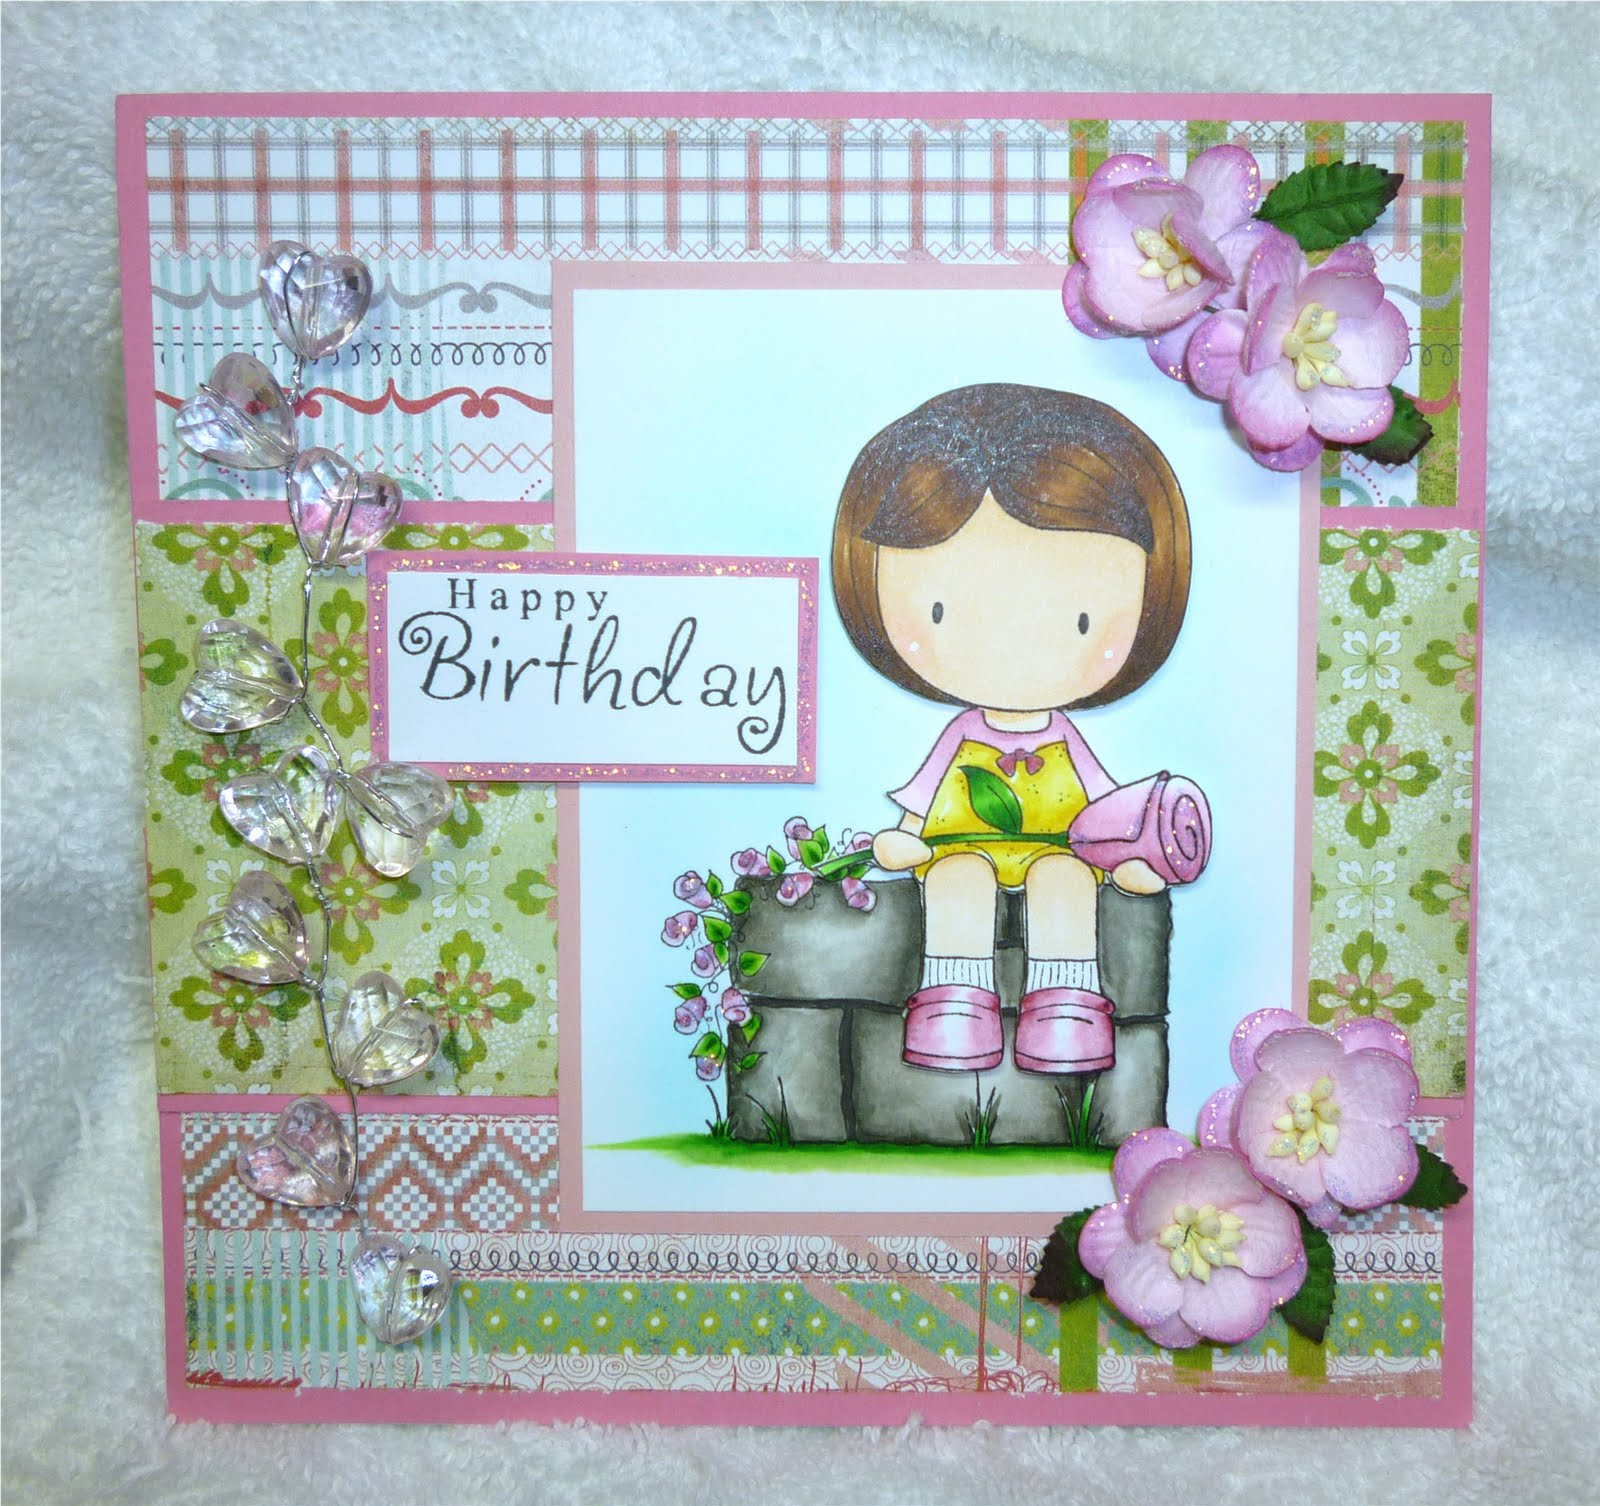 Big Birthday Card Ideas Big Ideas From A Little Girl Beautiful Birthday Cards